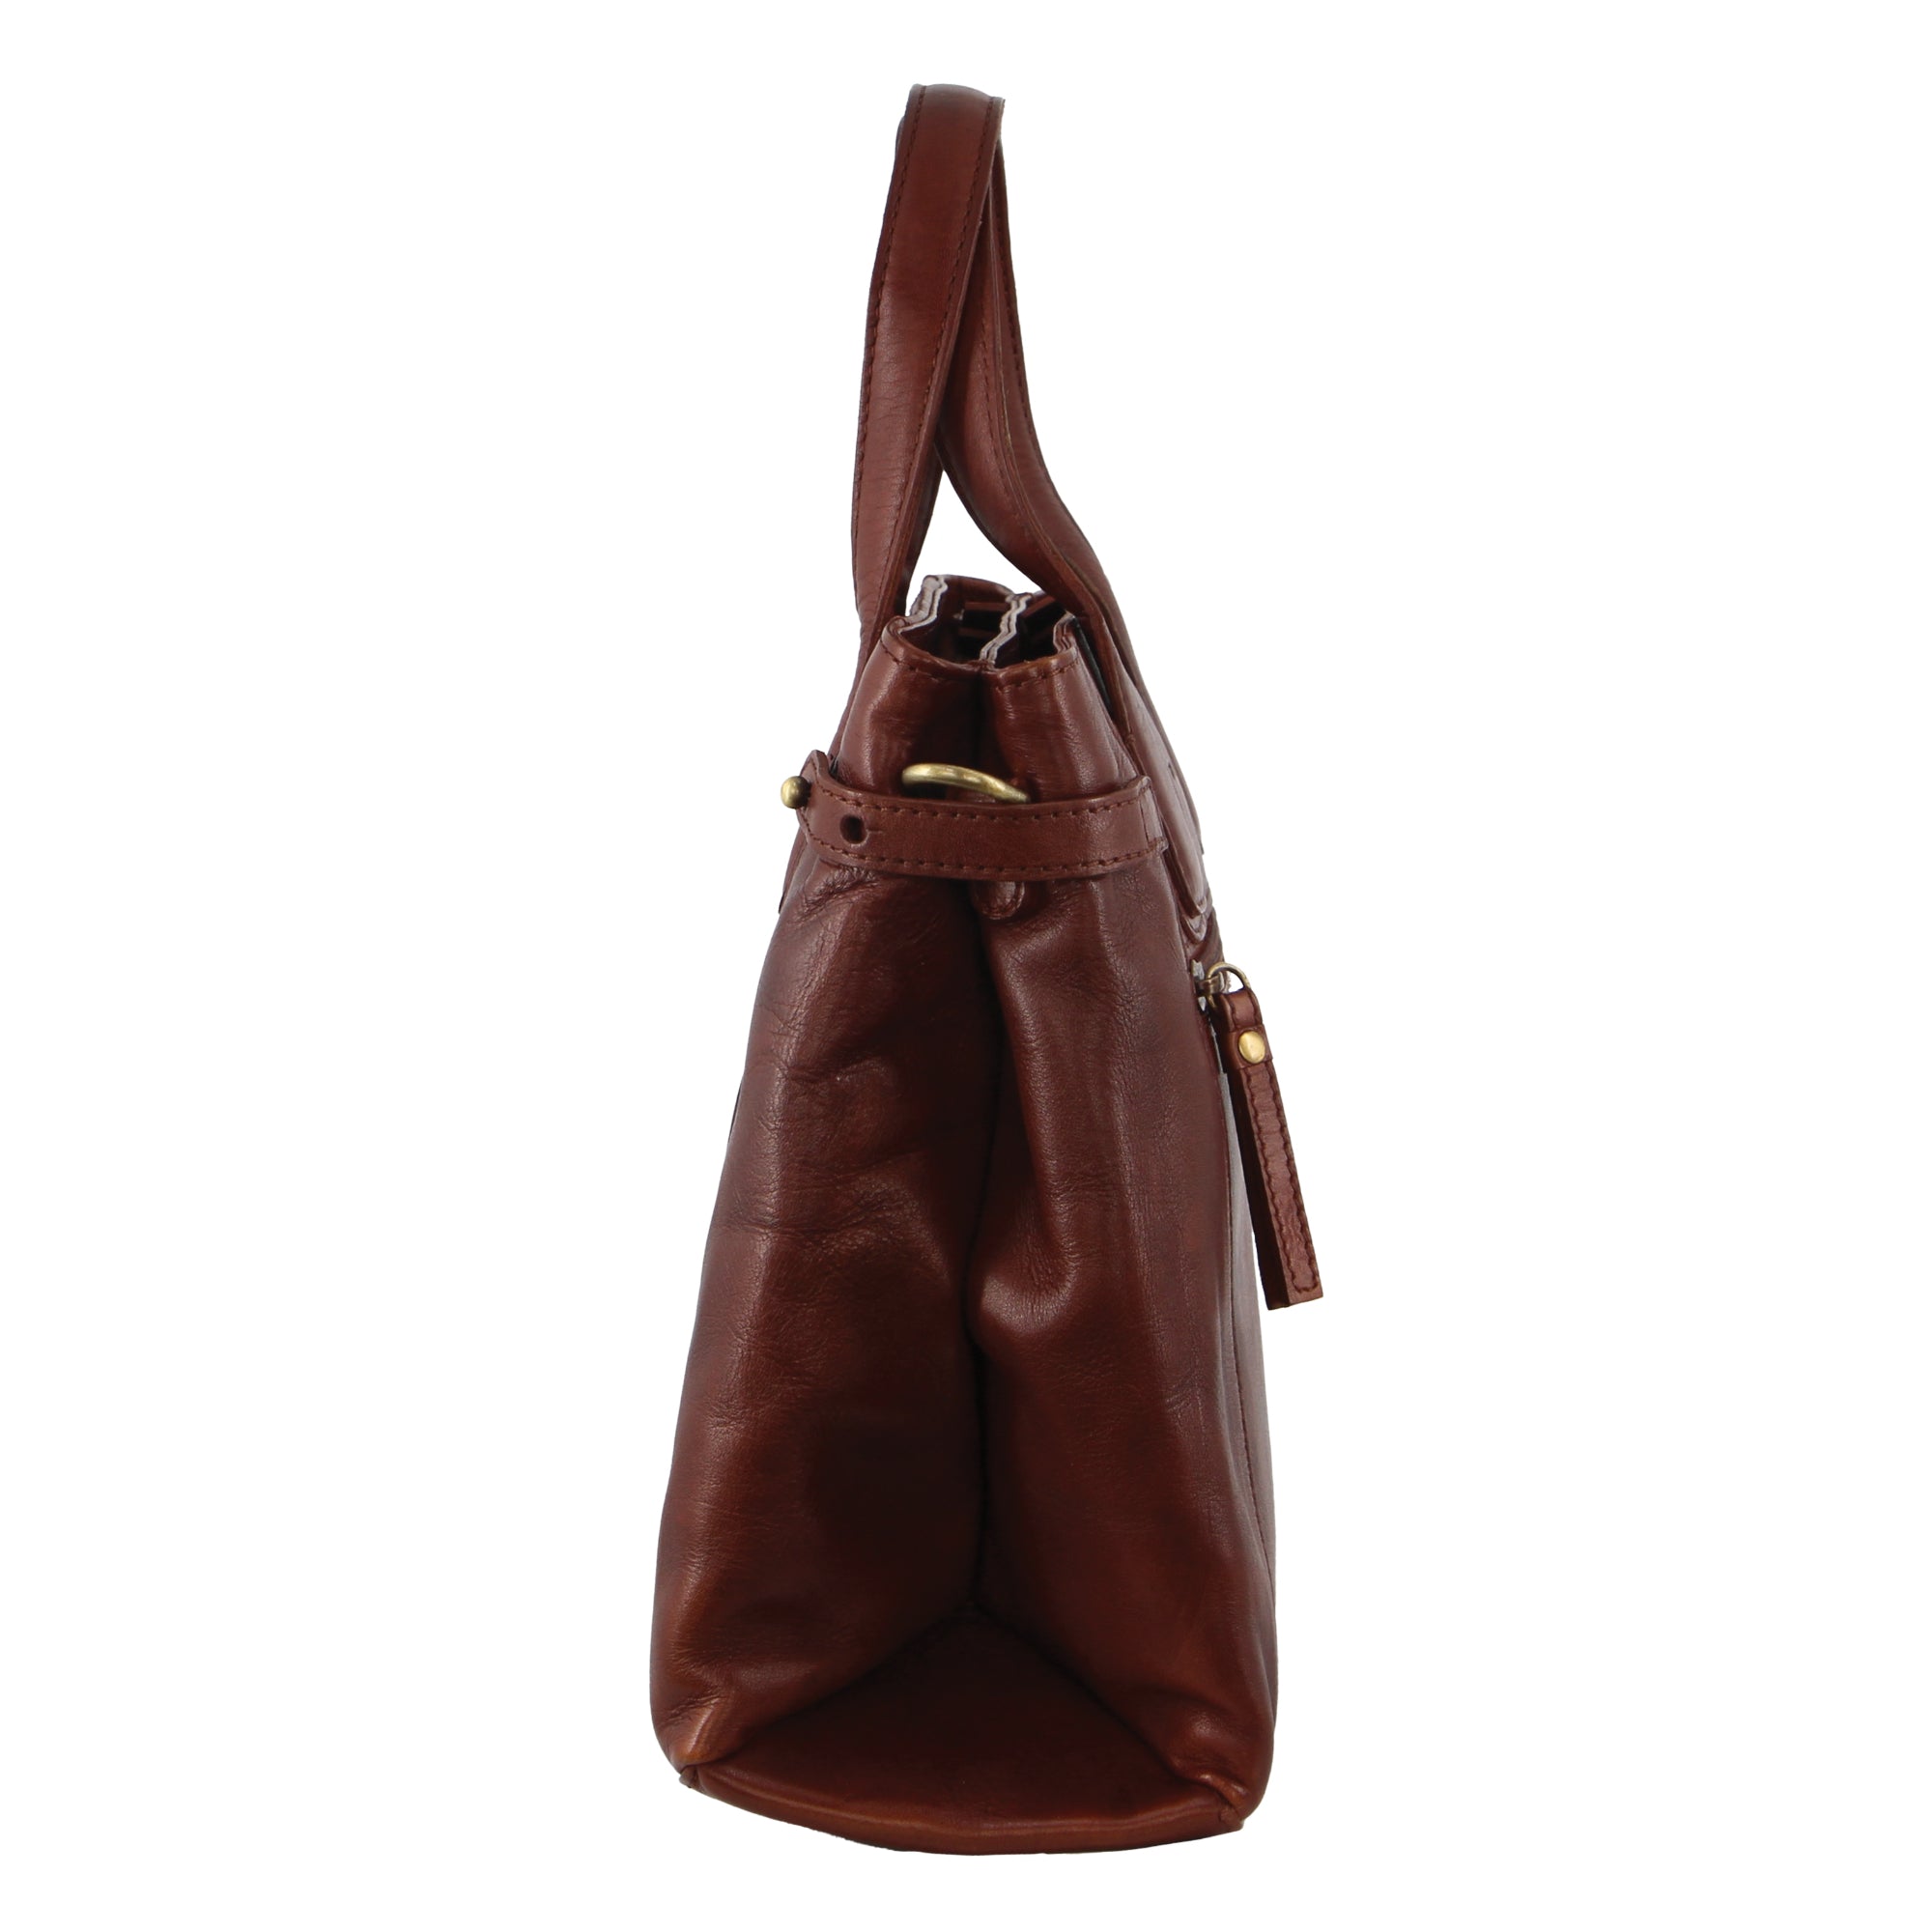 Pierre Cardin Ladies Leather Stitch-design Tote Bag in Tan